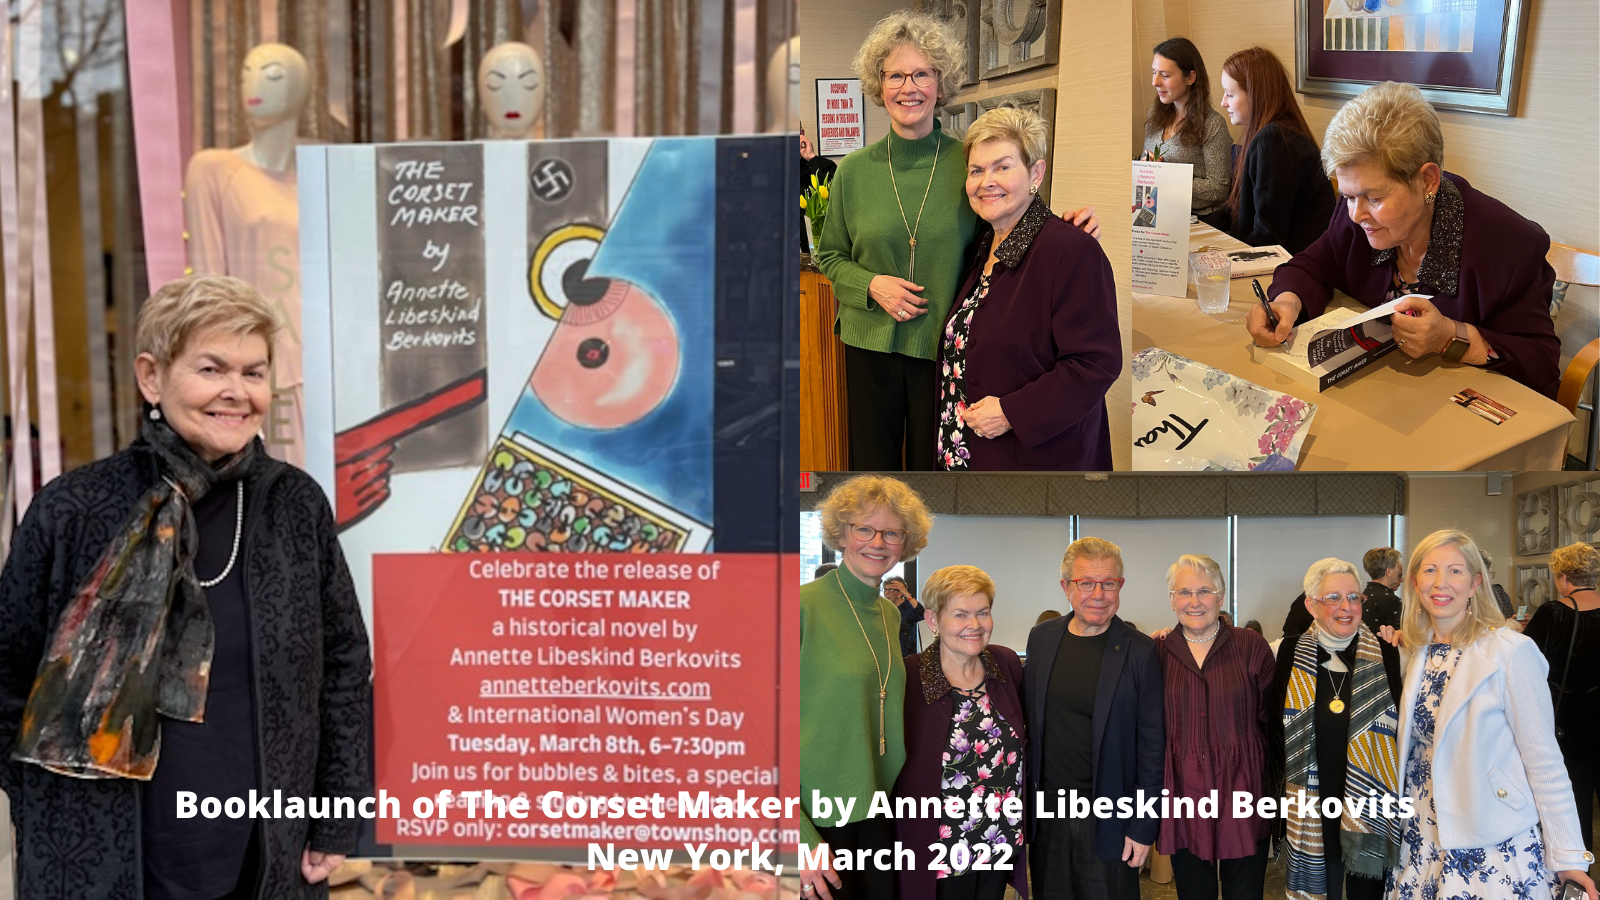 The Corset Maker by Annette Libeskind Berkovits